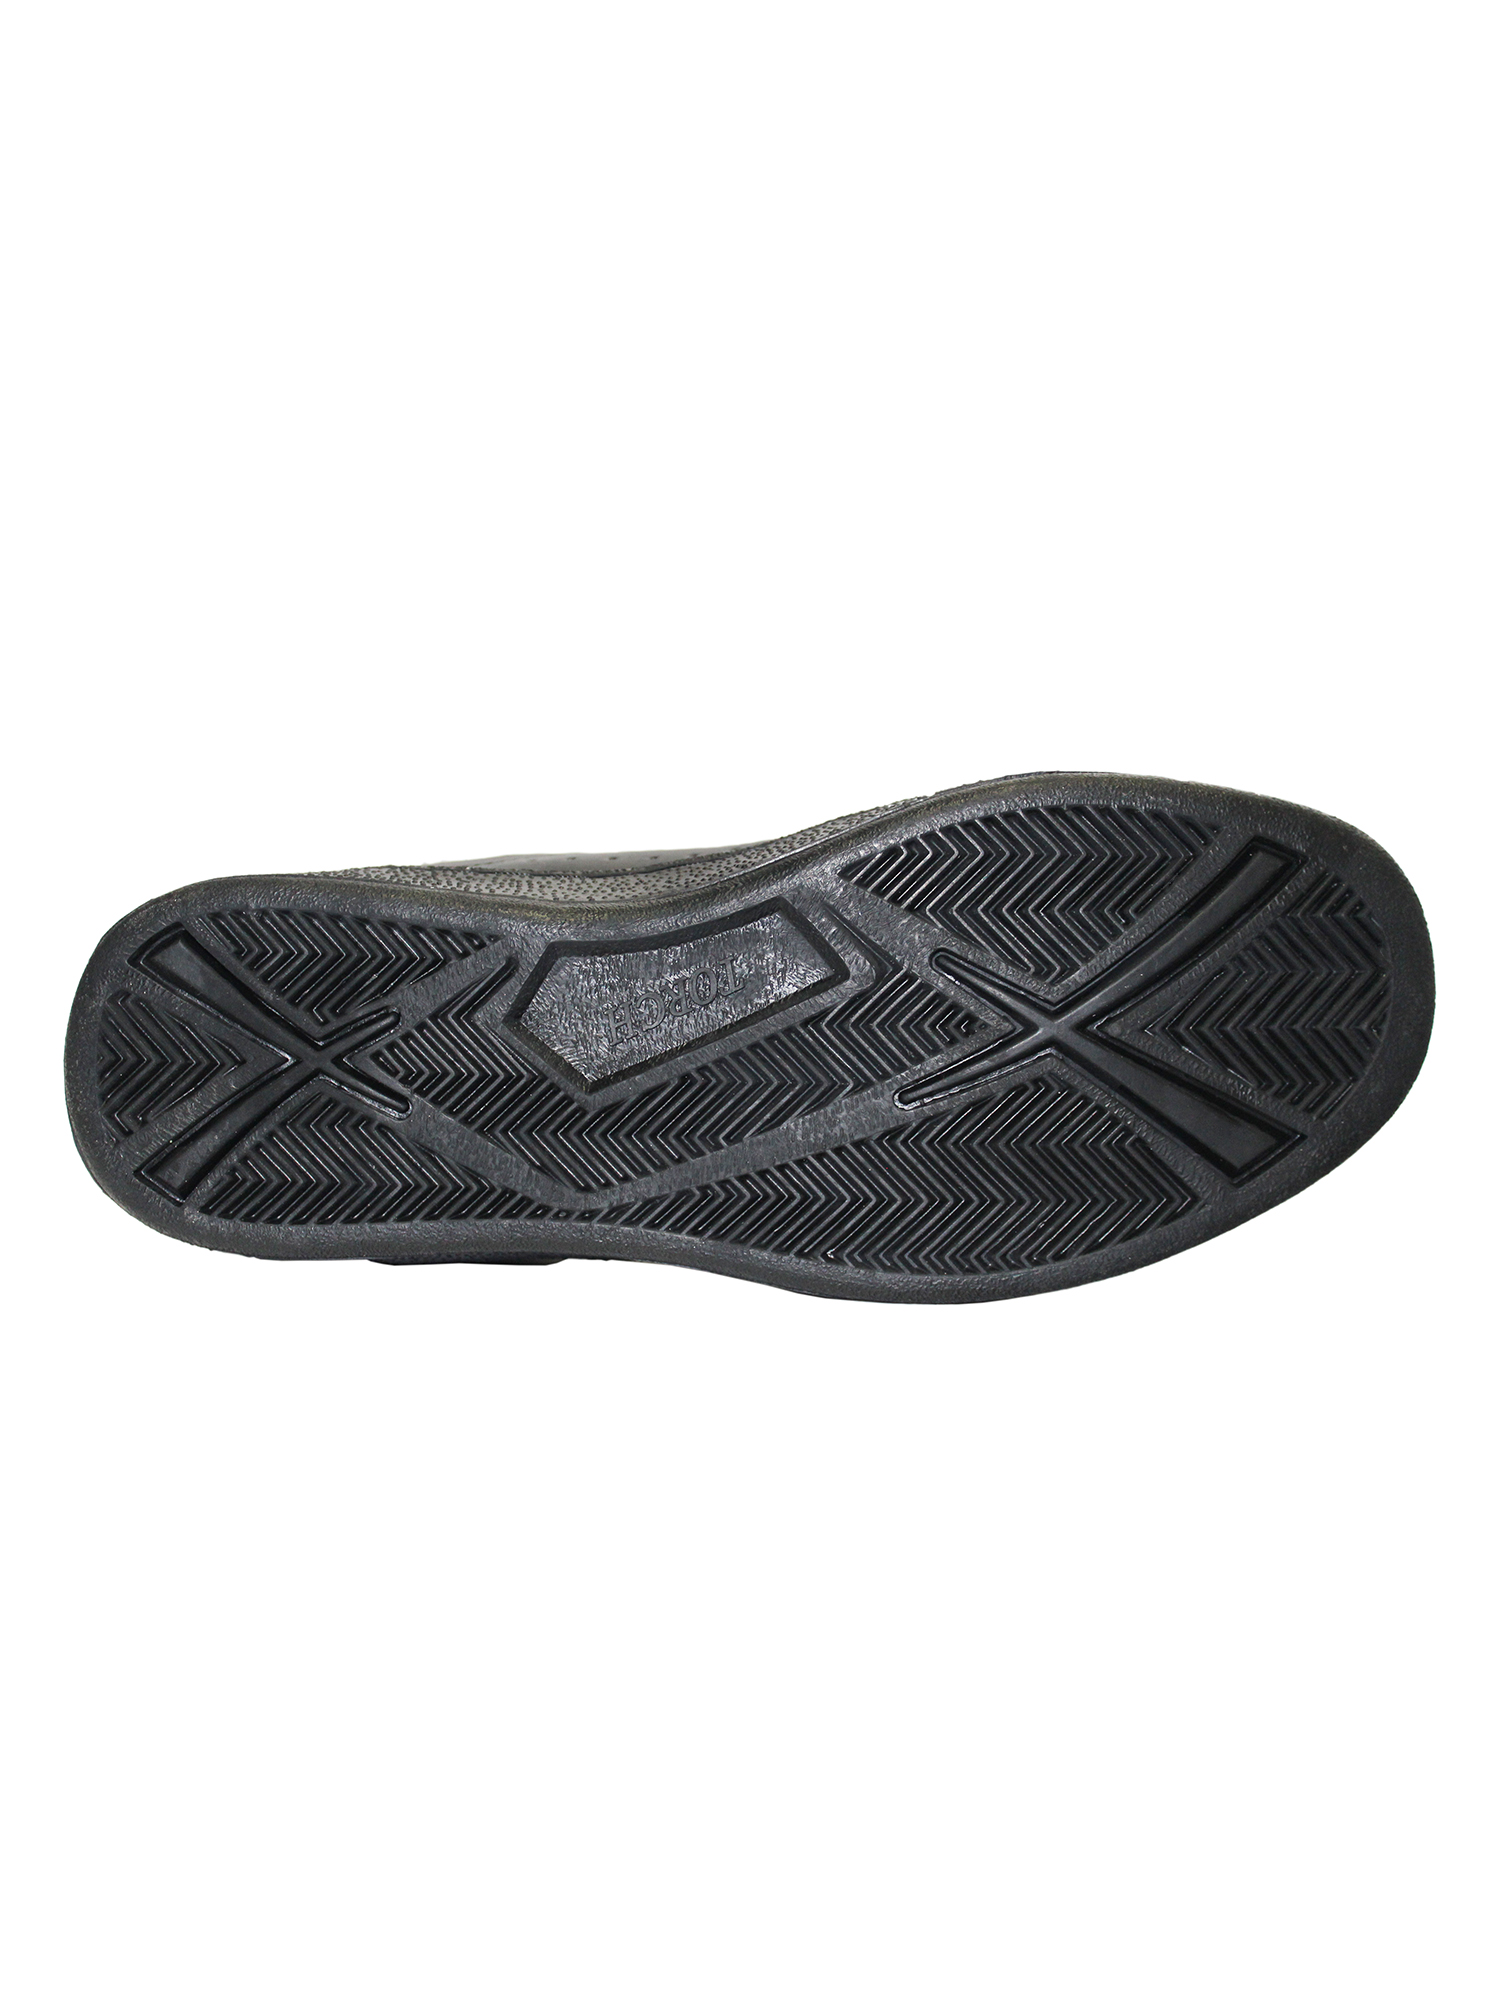 Tanleewa Men's Leather Strap Sneakers Lightweight Hook and Loop Walking Shoe Size 11 Adult Male - image 3 of 4